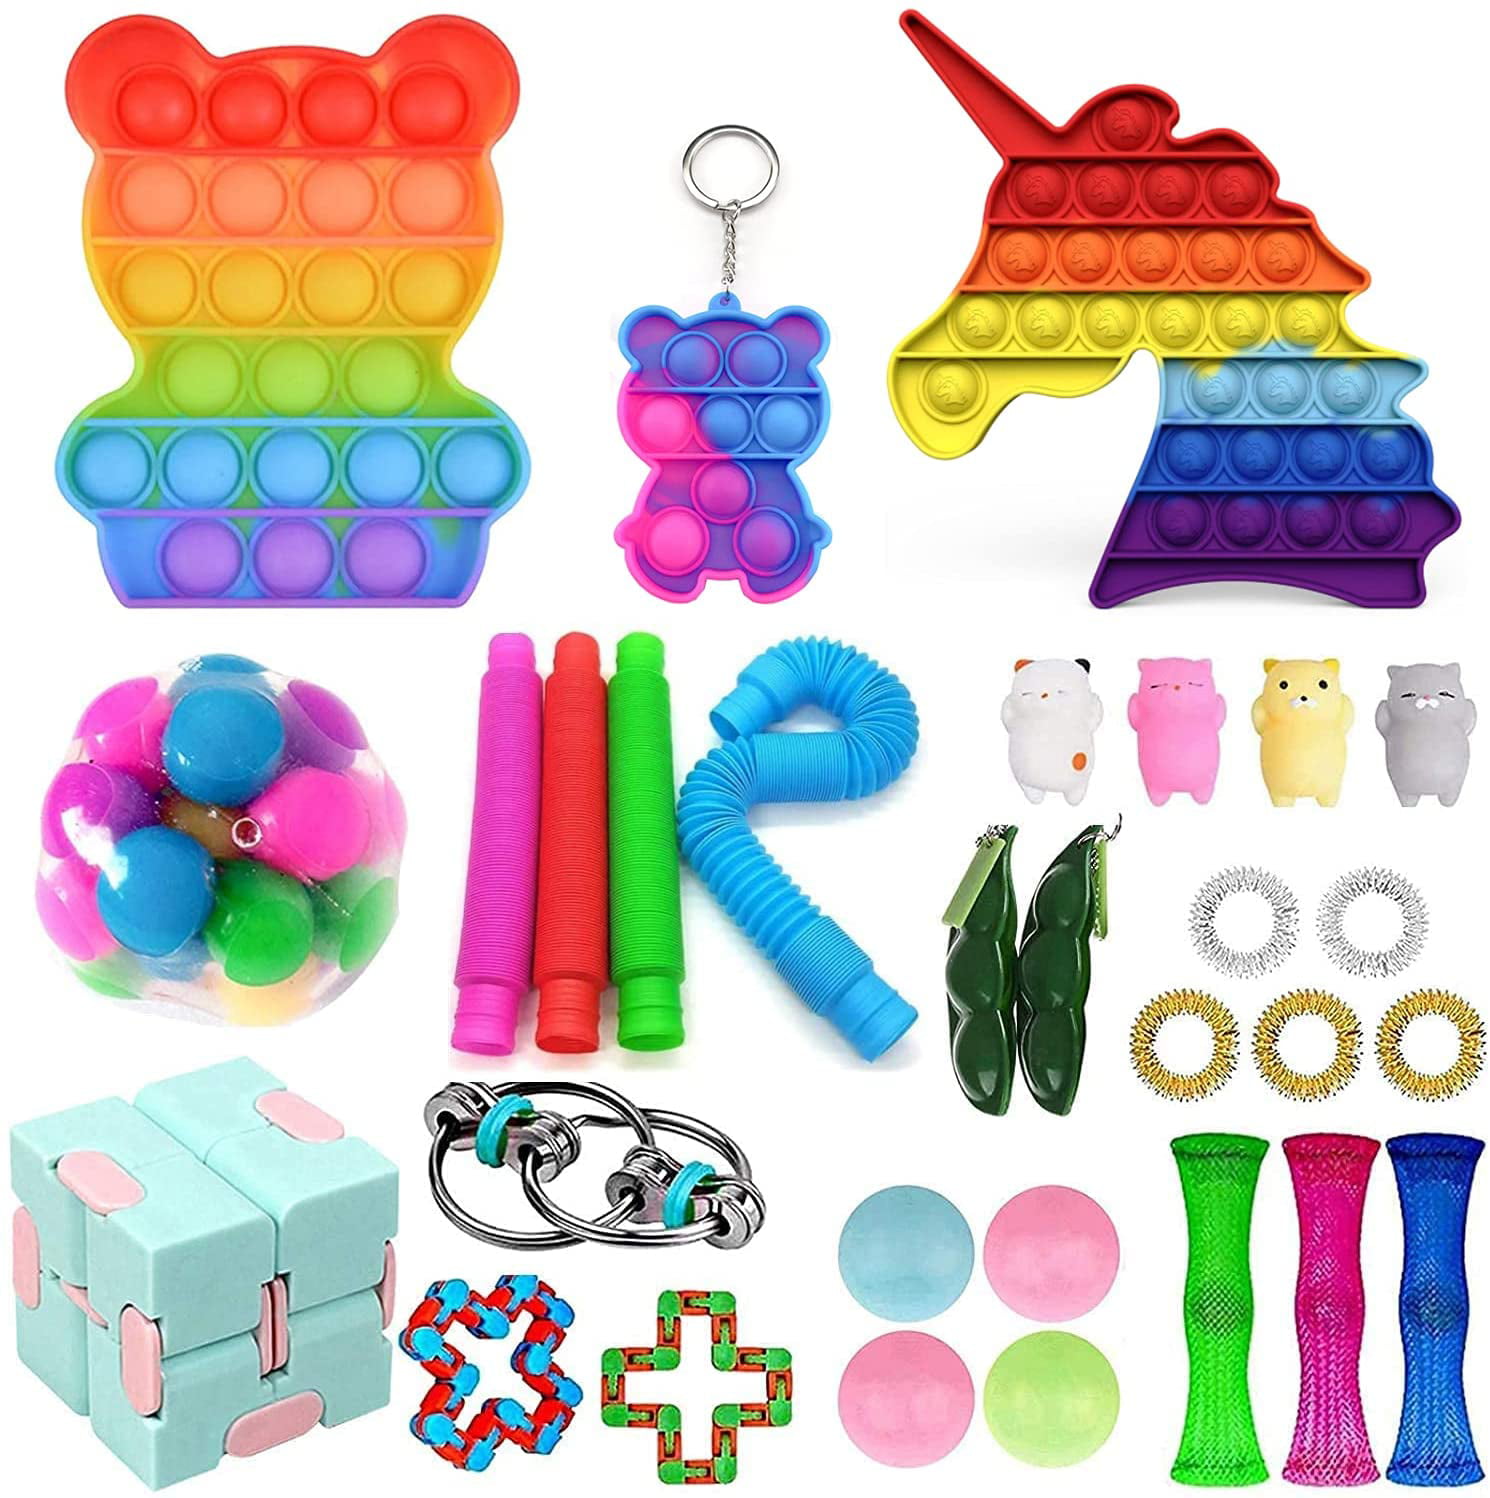 Details about   Marble Mesh Fidget Toys Set Kit Sensory Tools Bundle Stress Relief ADHD Toy 